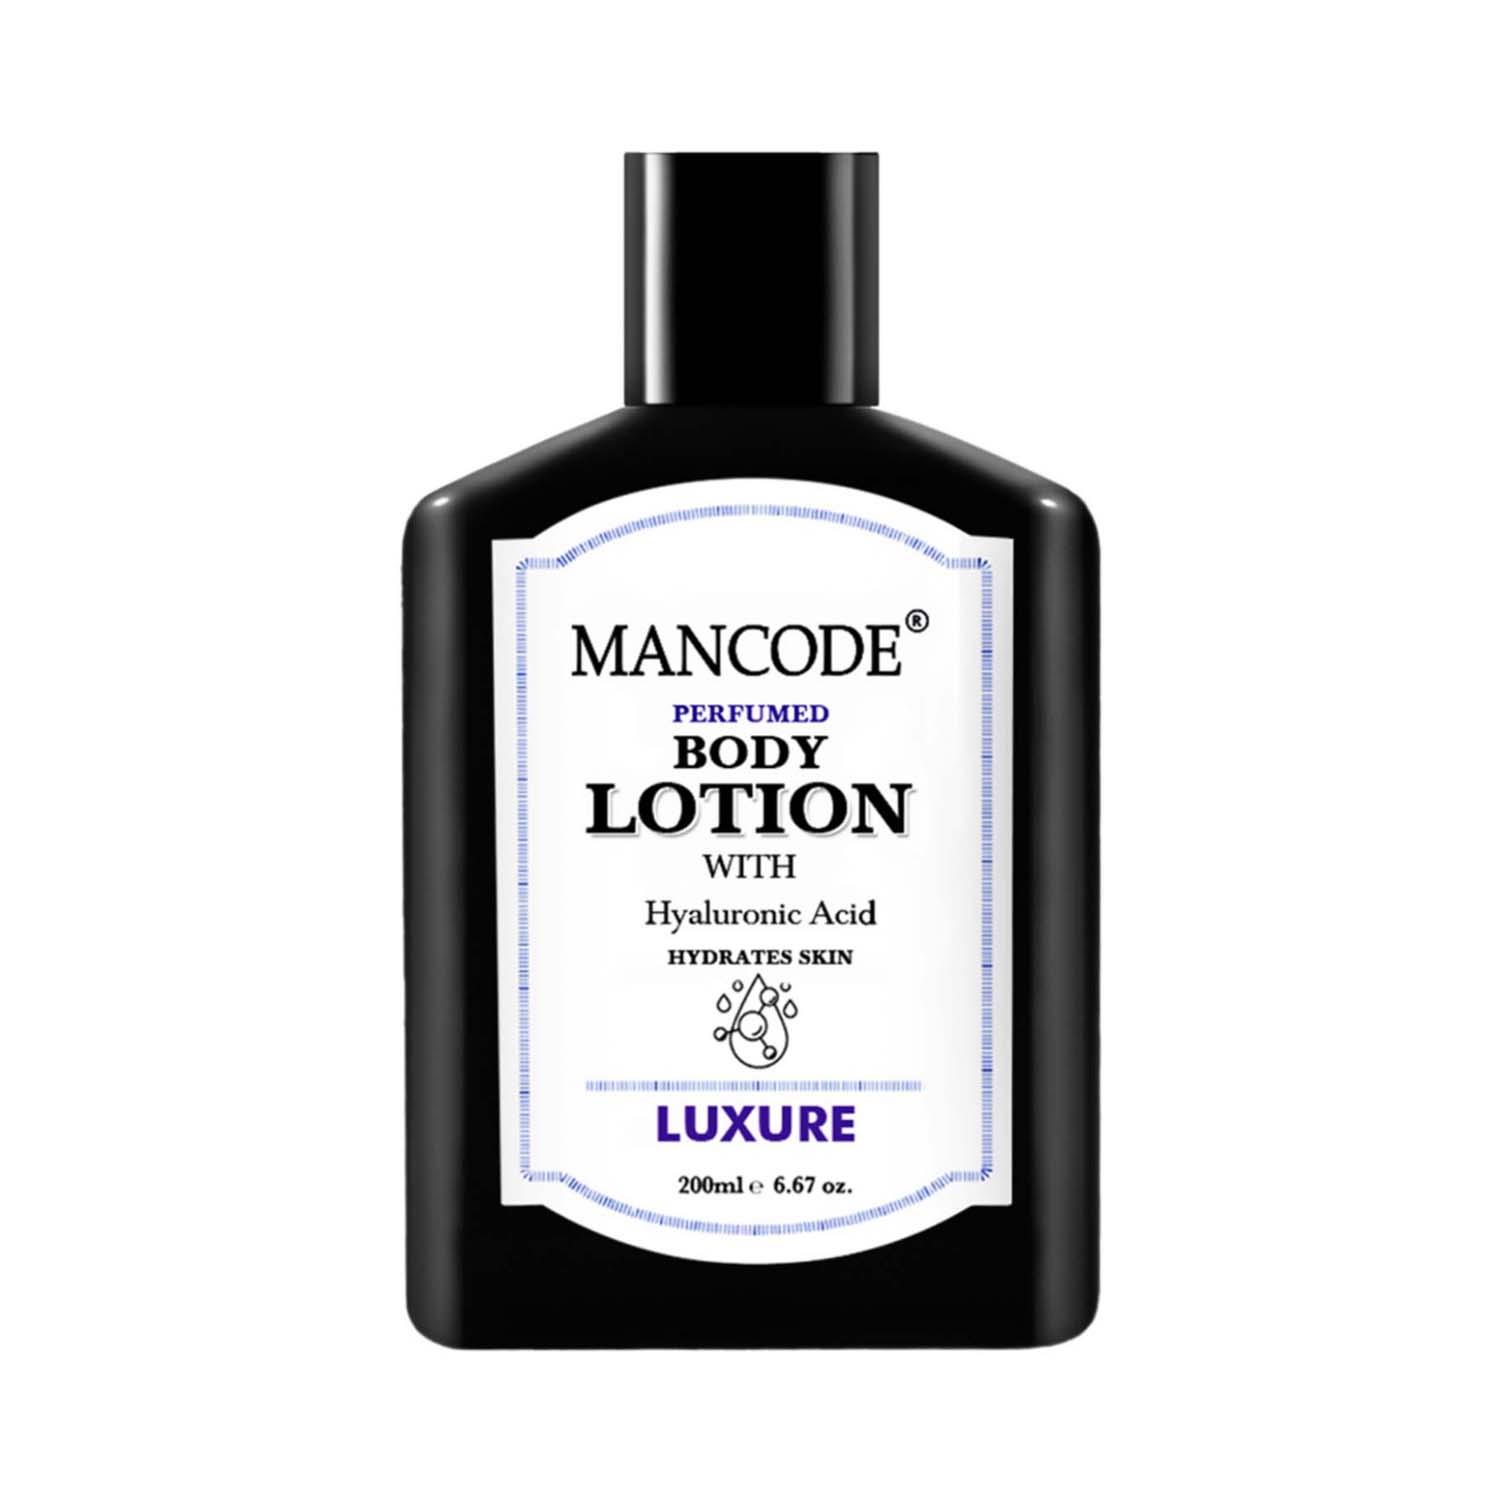 Mancode Luxure Perfume Body Lotion For Men (200 ml)